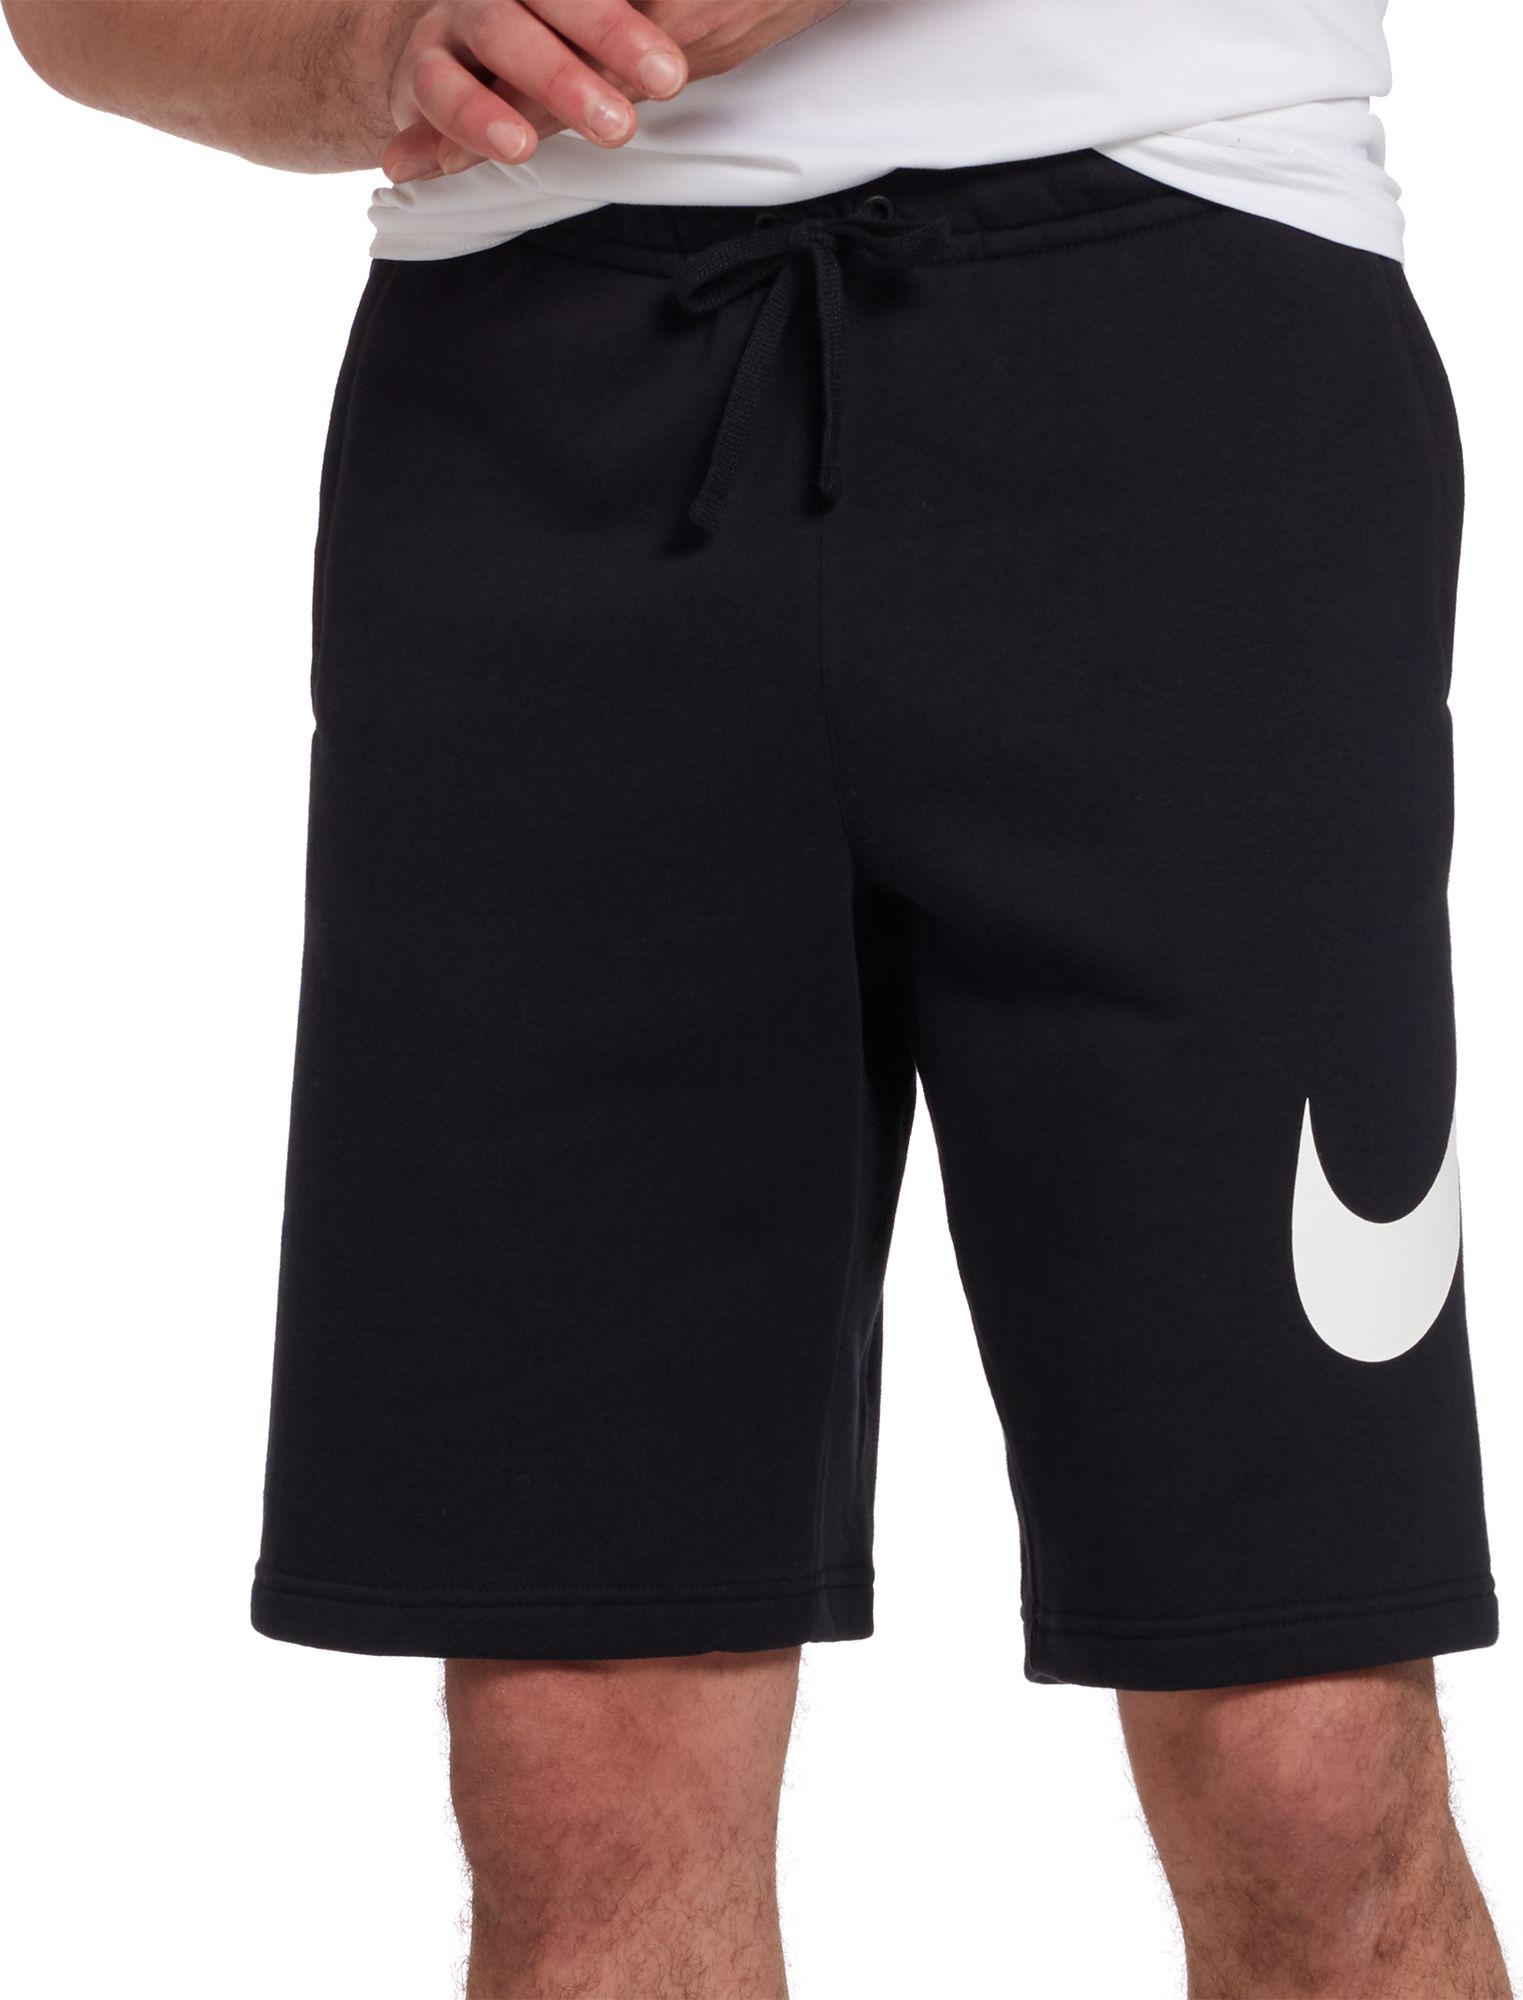 nike men's club fleece graphic shorts